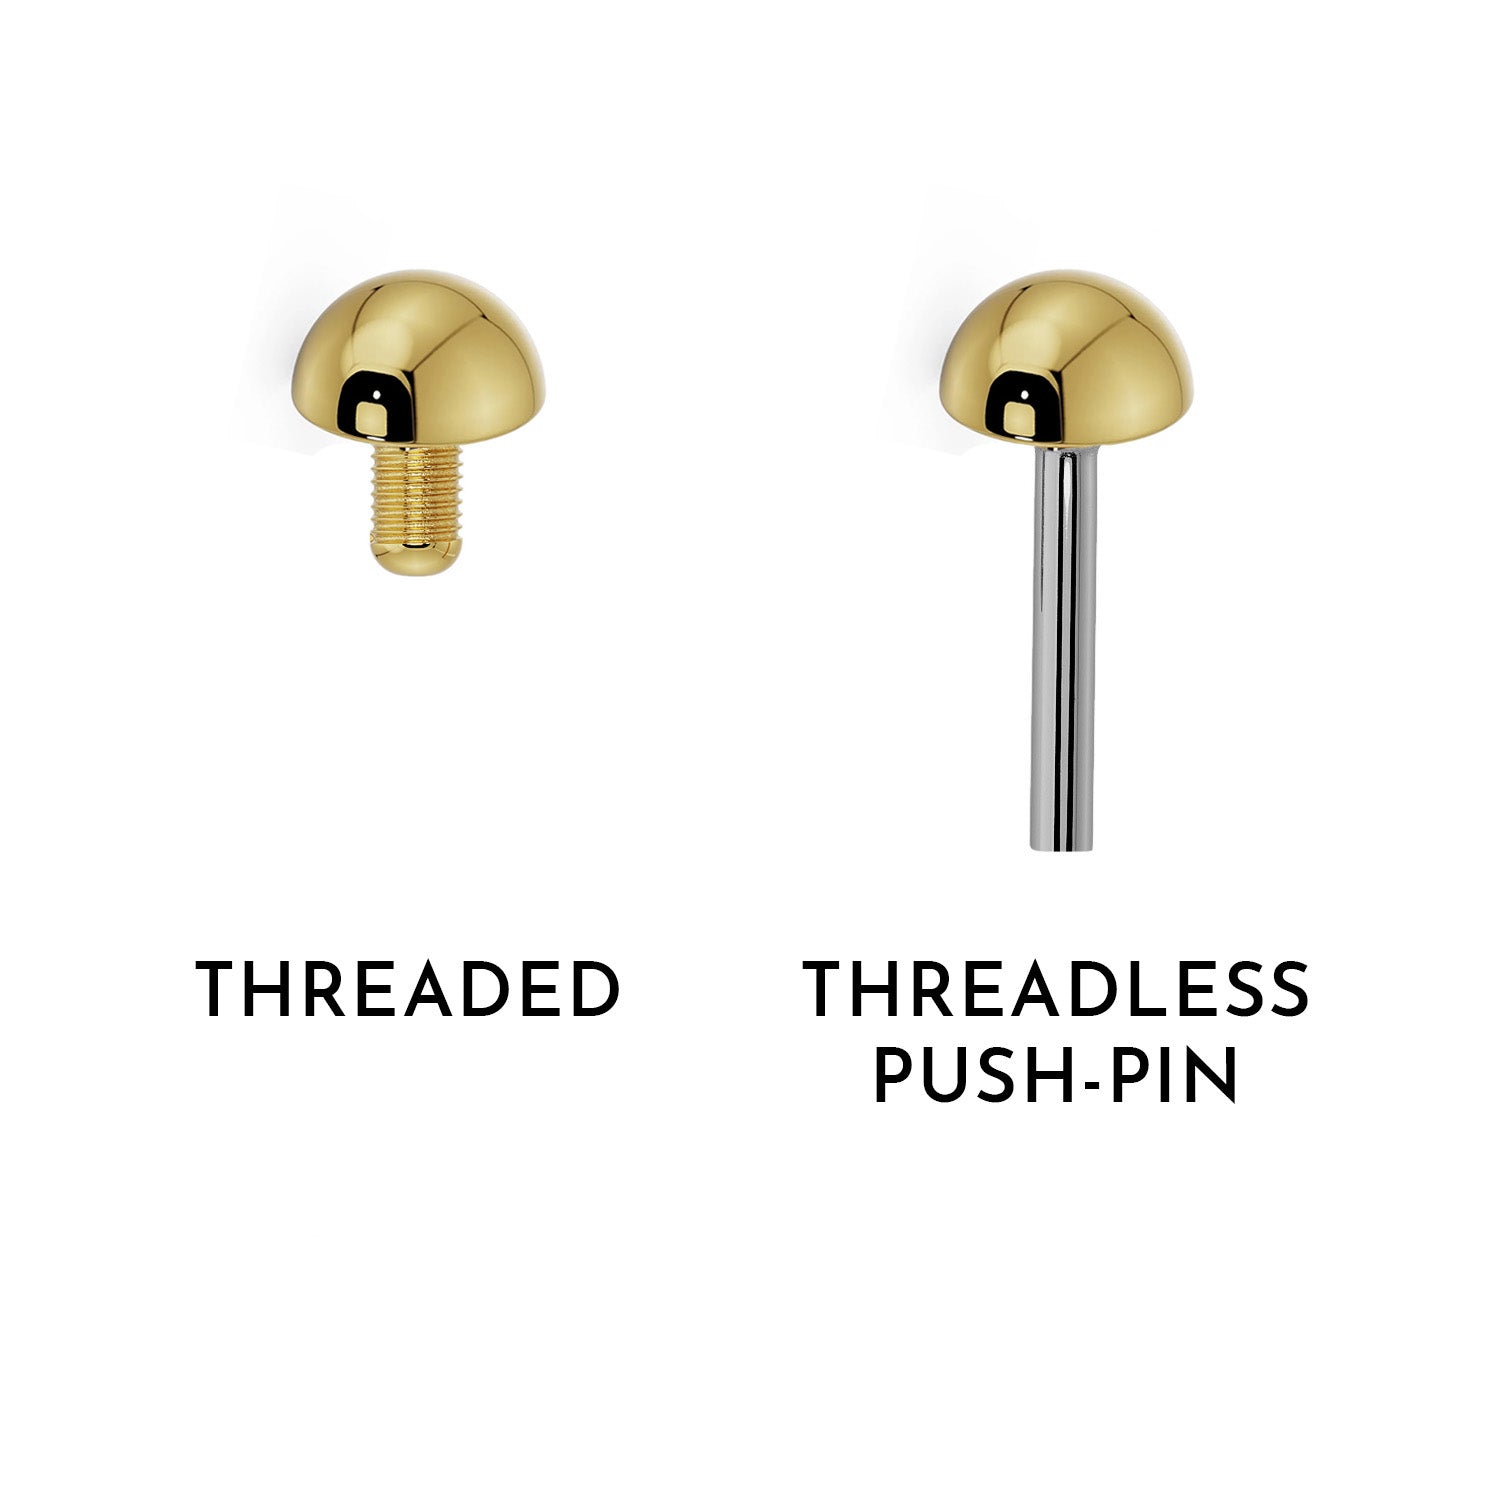 Threaded verse threadless push pin